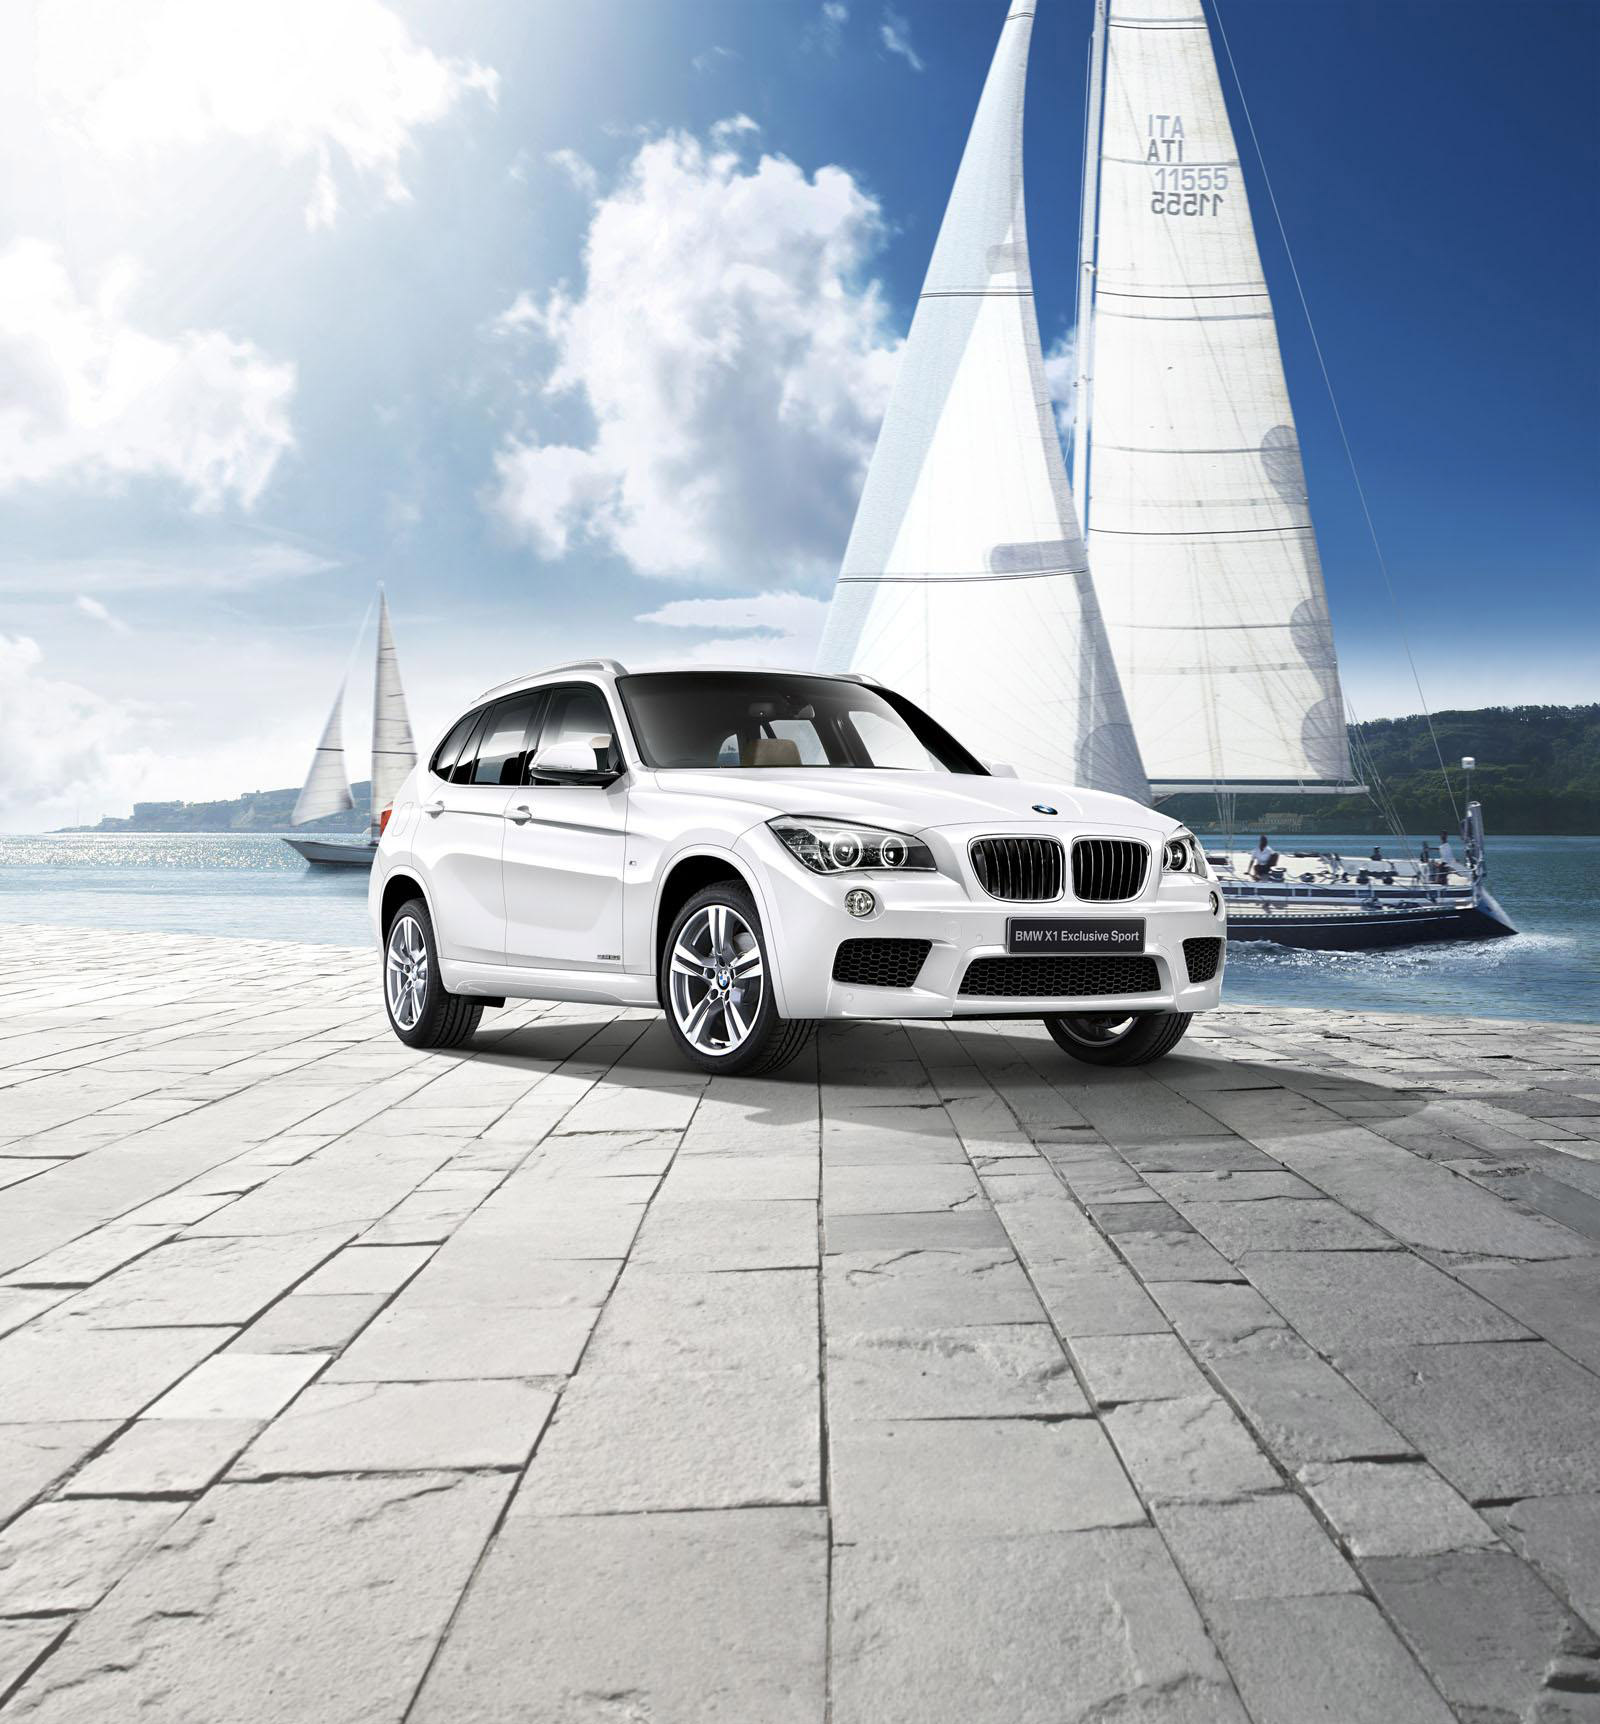 BMW X1 Exclusive Sport